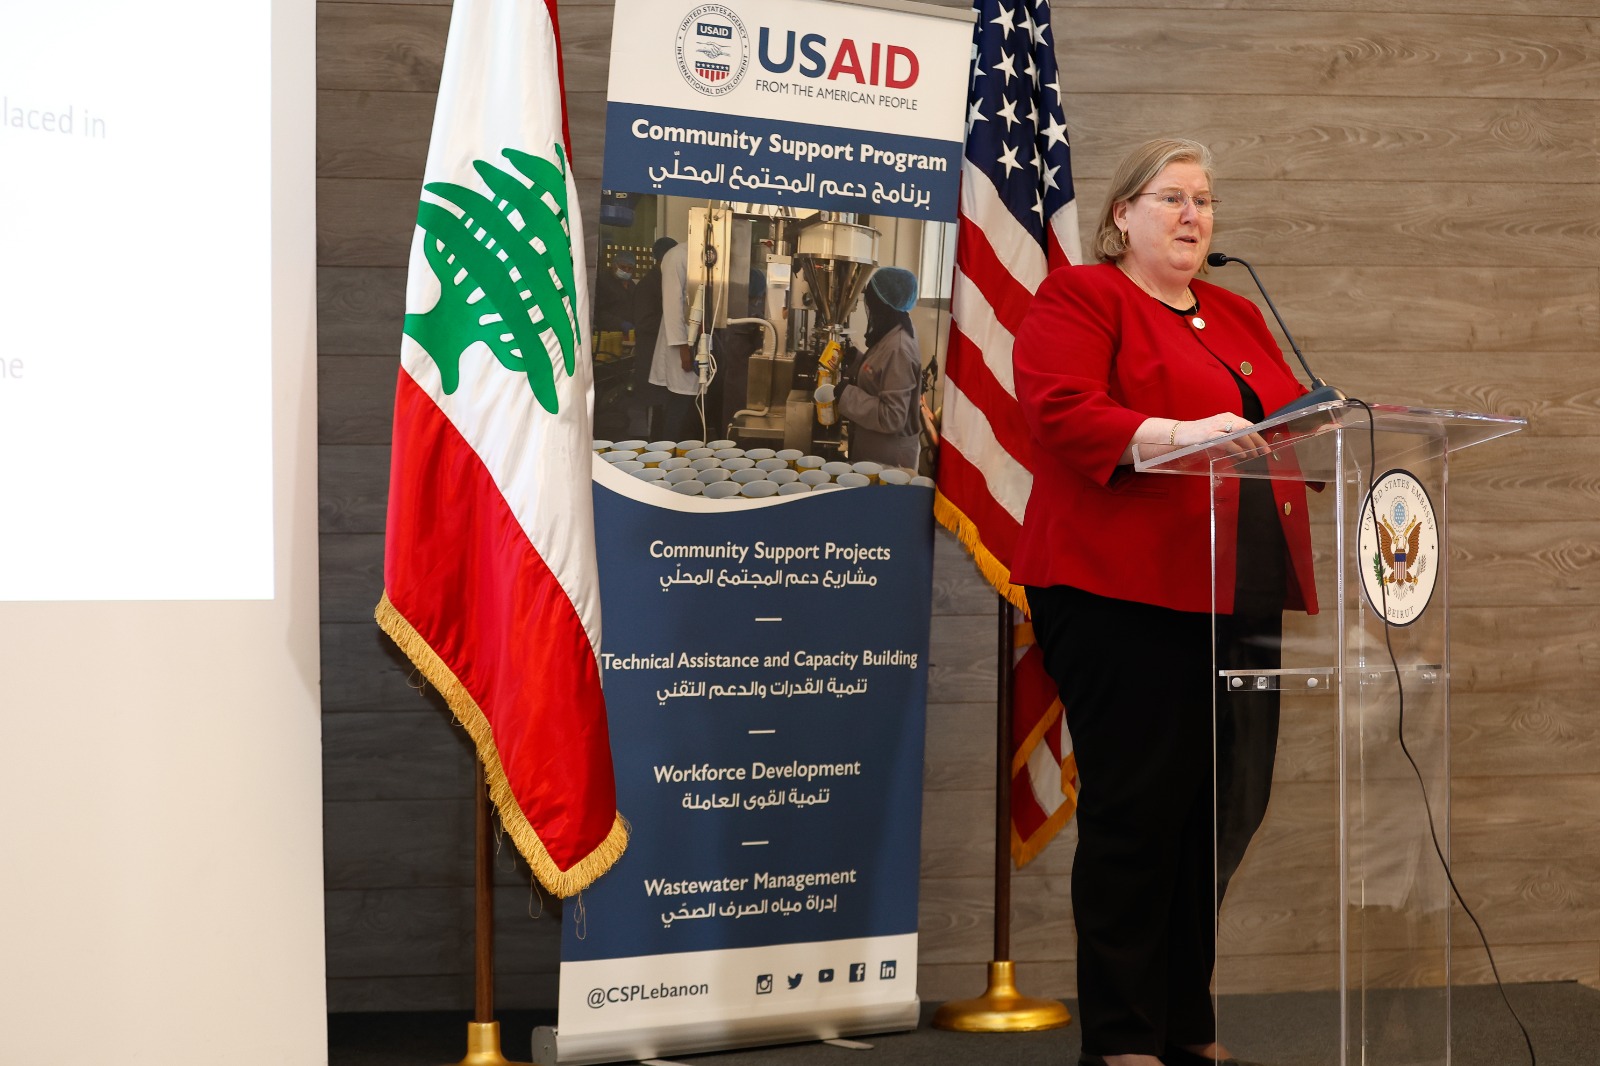 USAID Mission Director Eileen Devitt giving her speech